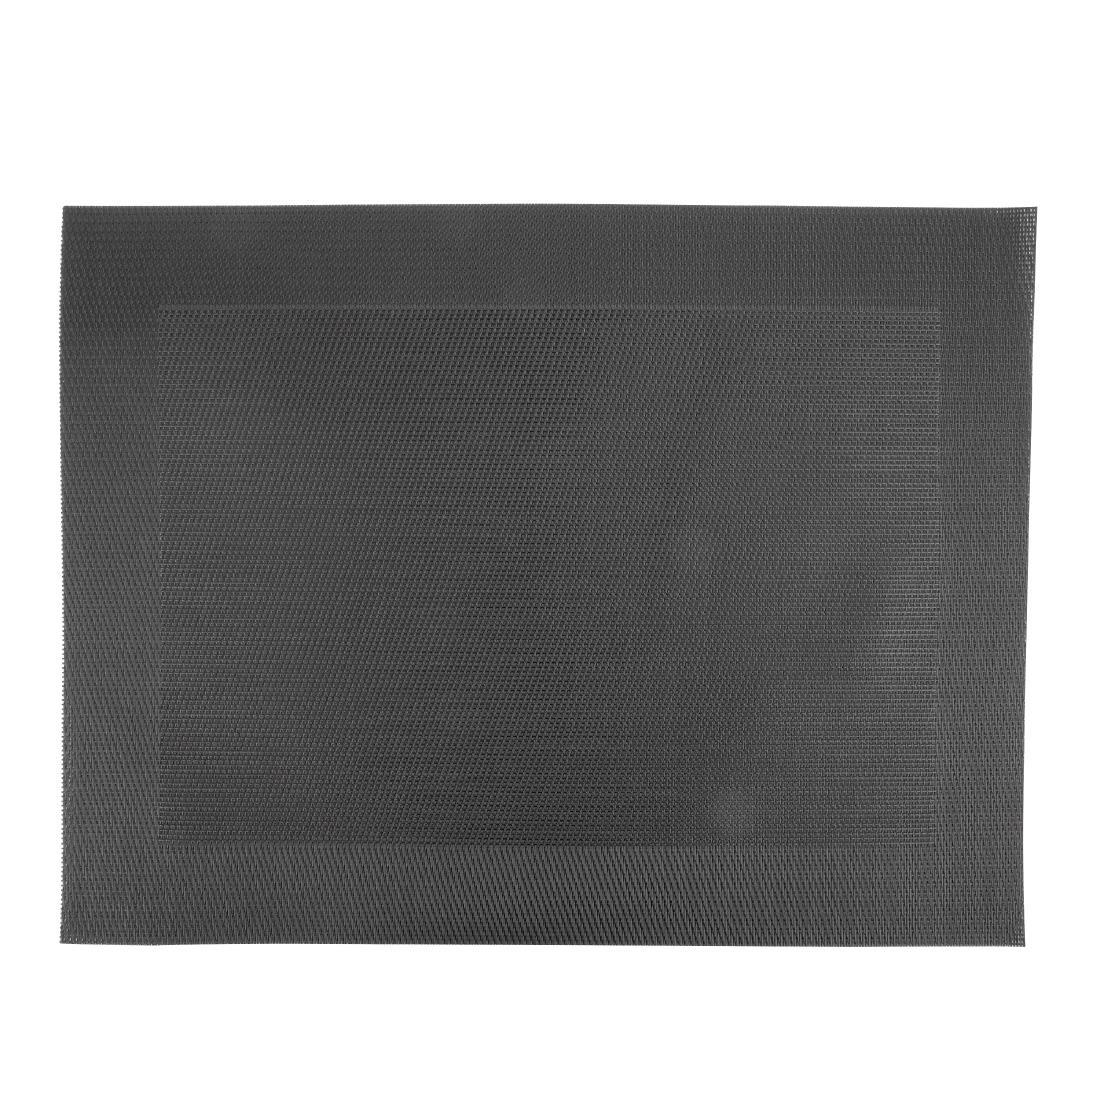 Woven PVC Black Table Mat (Pack of 4) - GG042  - 3